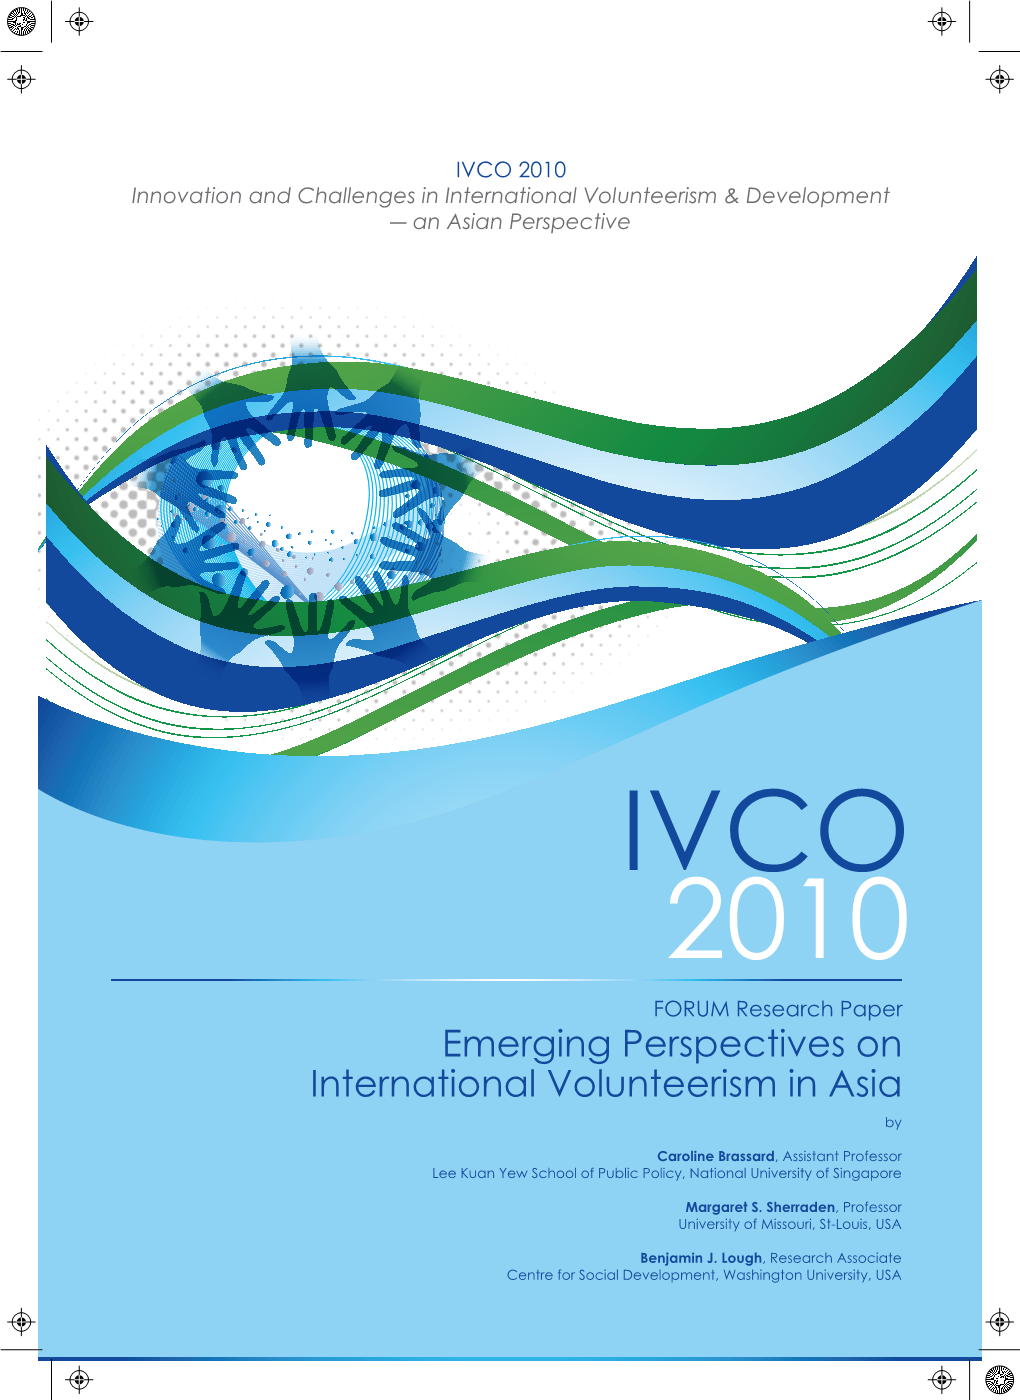 Emerging Perspectives on International Volunteerism in Asia”